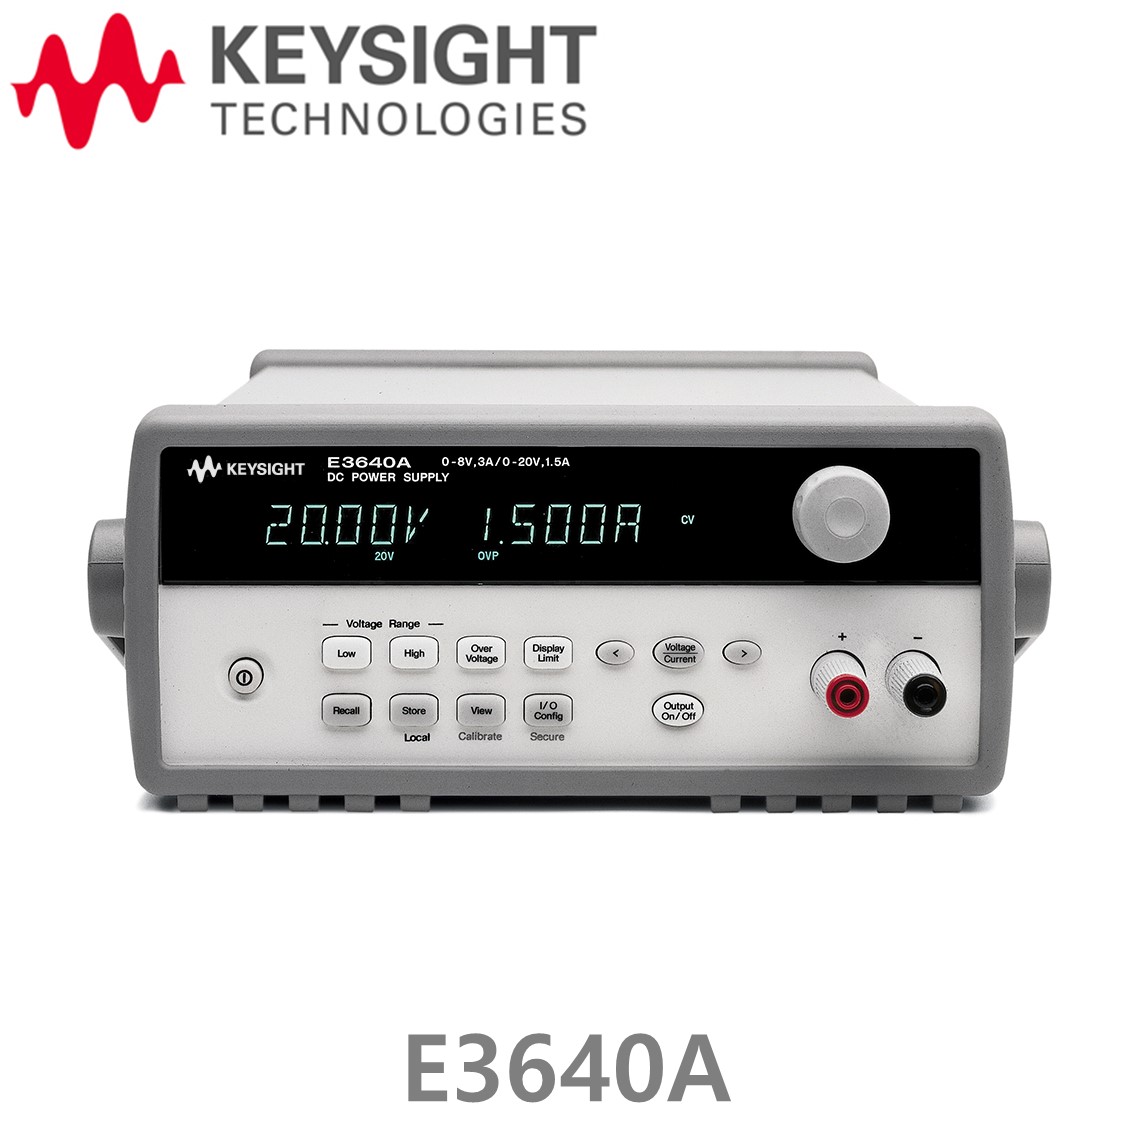 [ KEYSIGHT E3640A ] 키사이트 DC파워서플라이 30W 8V/3A or 20V/1.5A, DC전원공급기